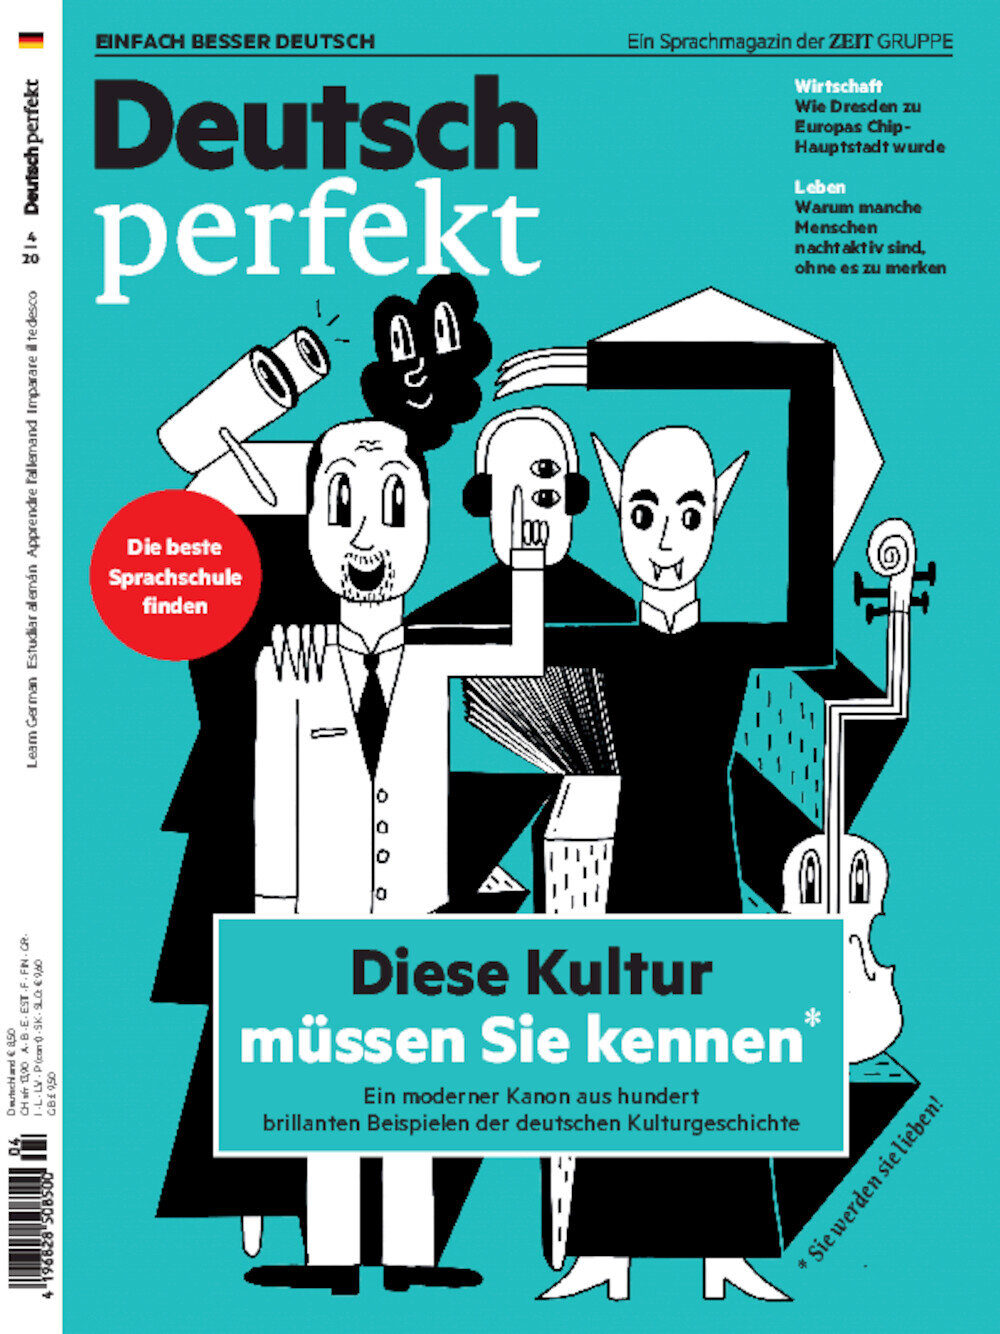 Deutsch perfekt ePaper 04/2020